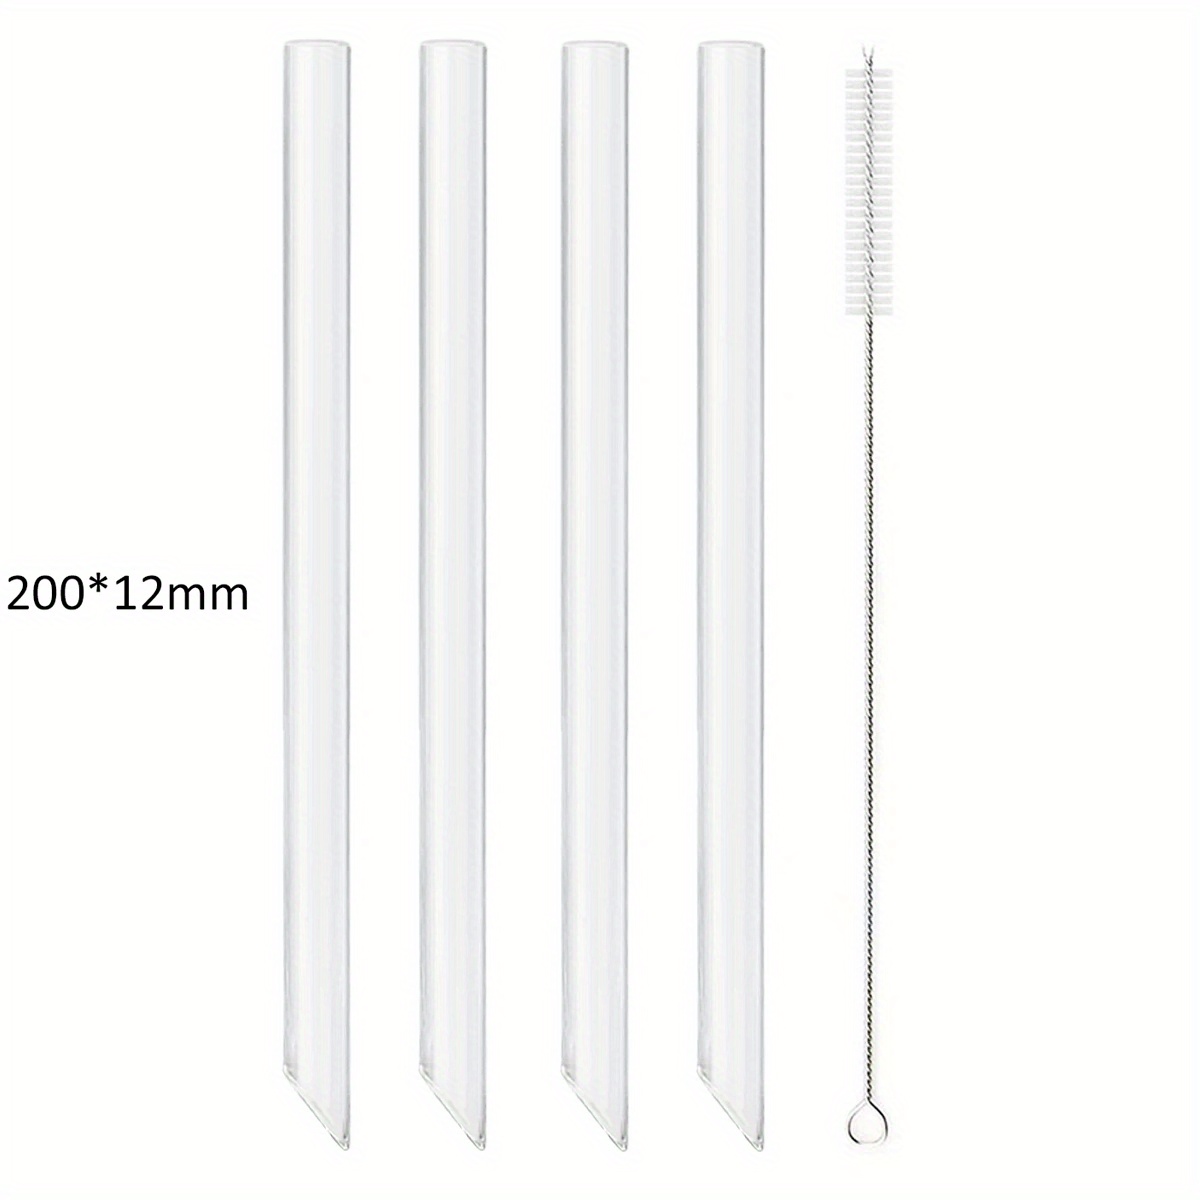 Large 12mm Glass Boba Straws (4-Pack)